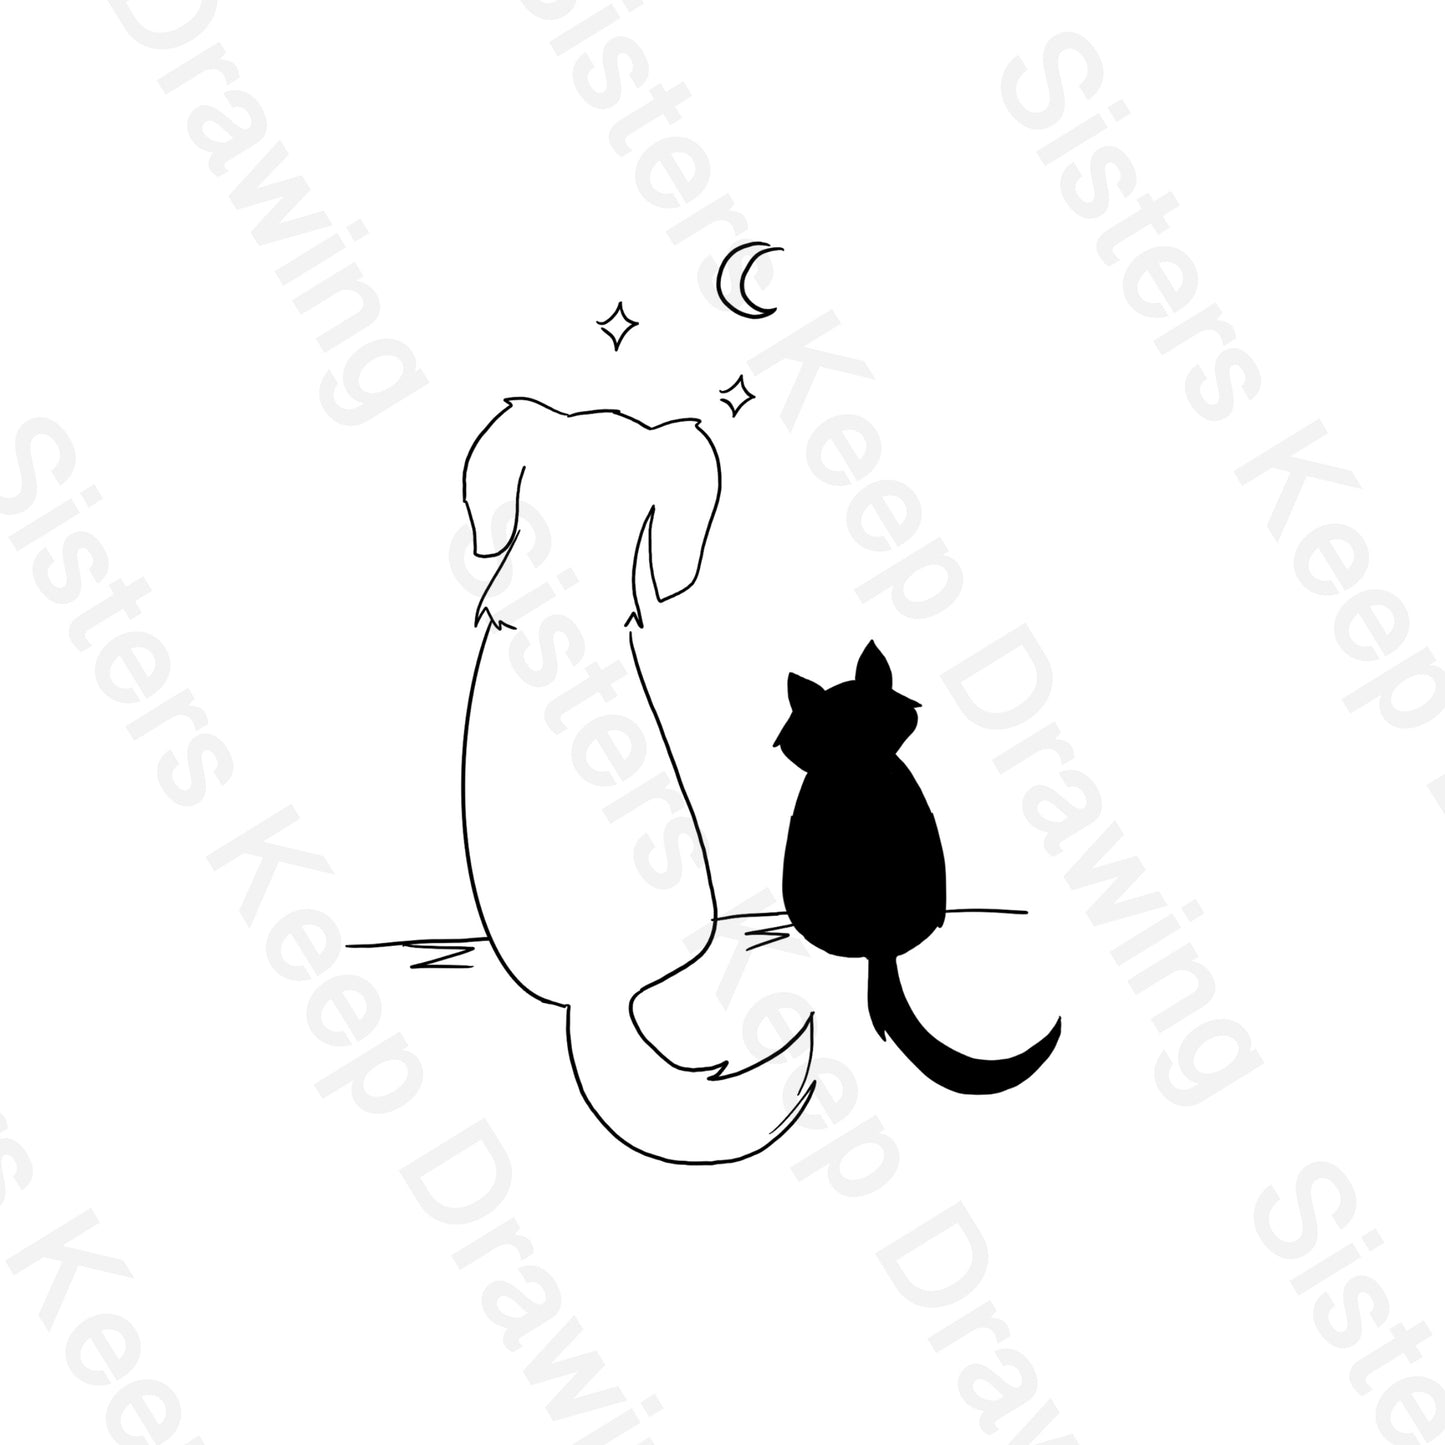 Black Cat & Golden Retriever Stargazing - Tattoo Transparent Permission PNG- instant download digital printable artwork